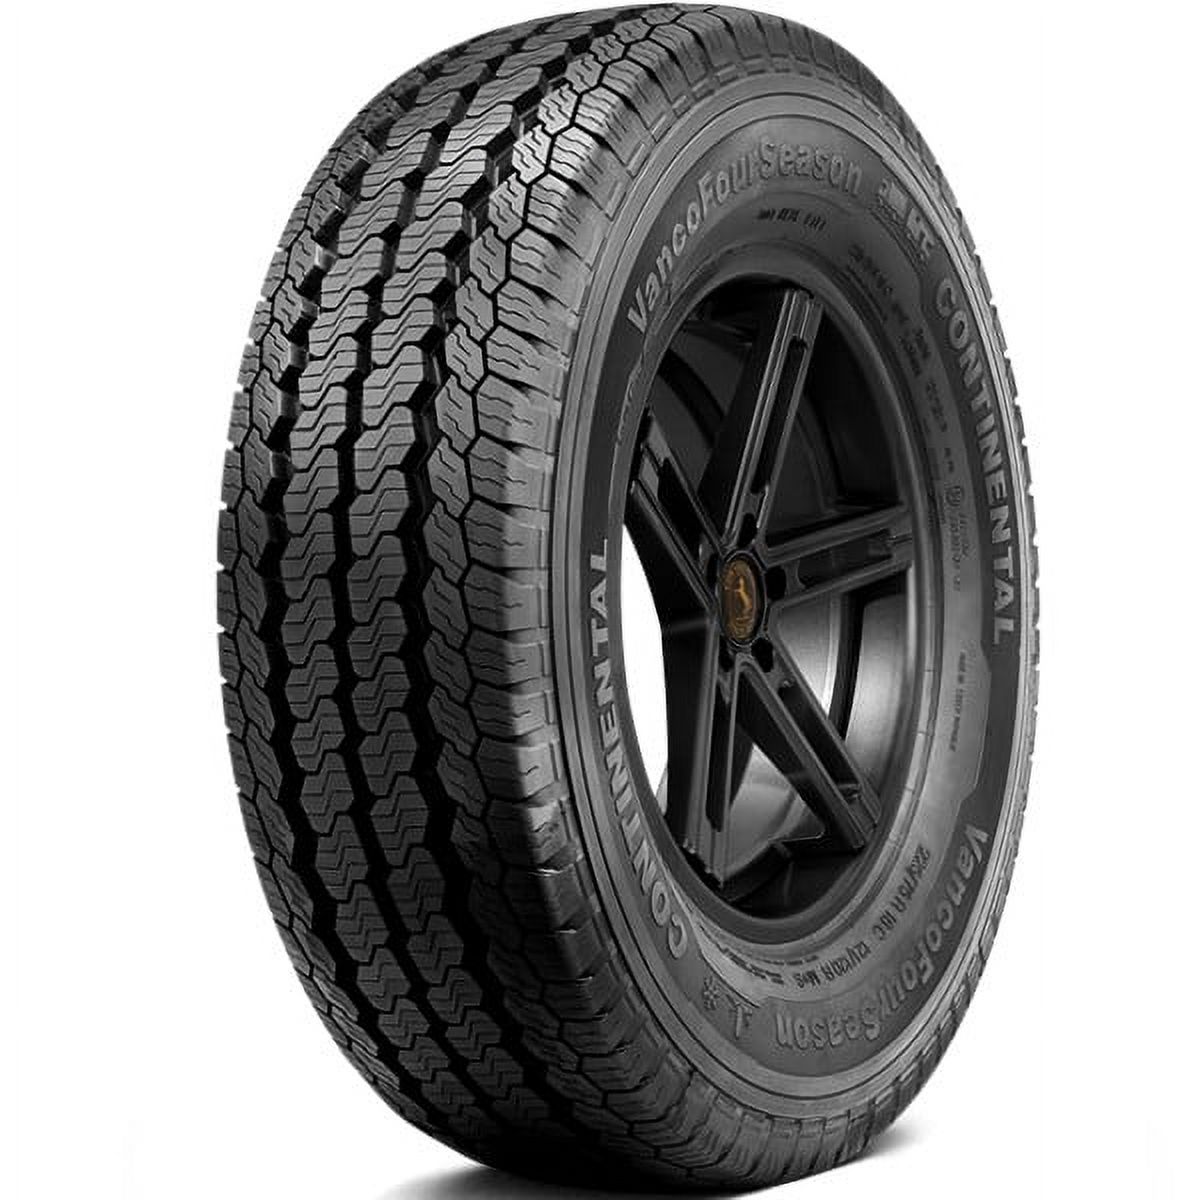 Continental Vanco 4 Season 215/85R16 115 Q Tire - image 1 of 3